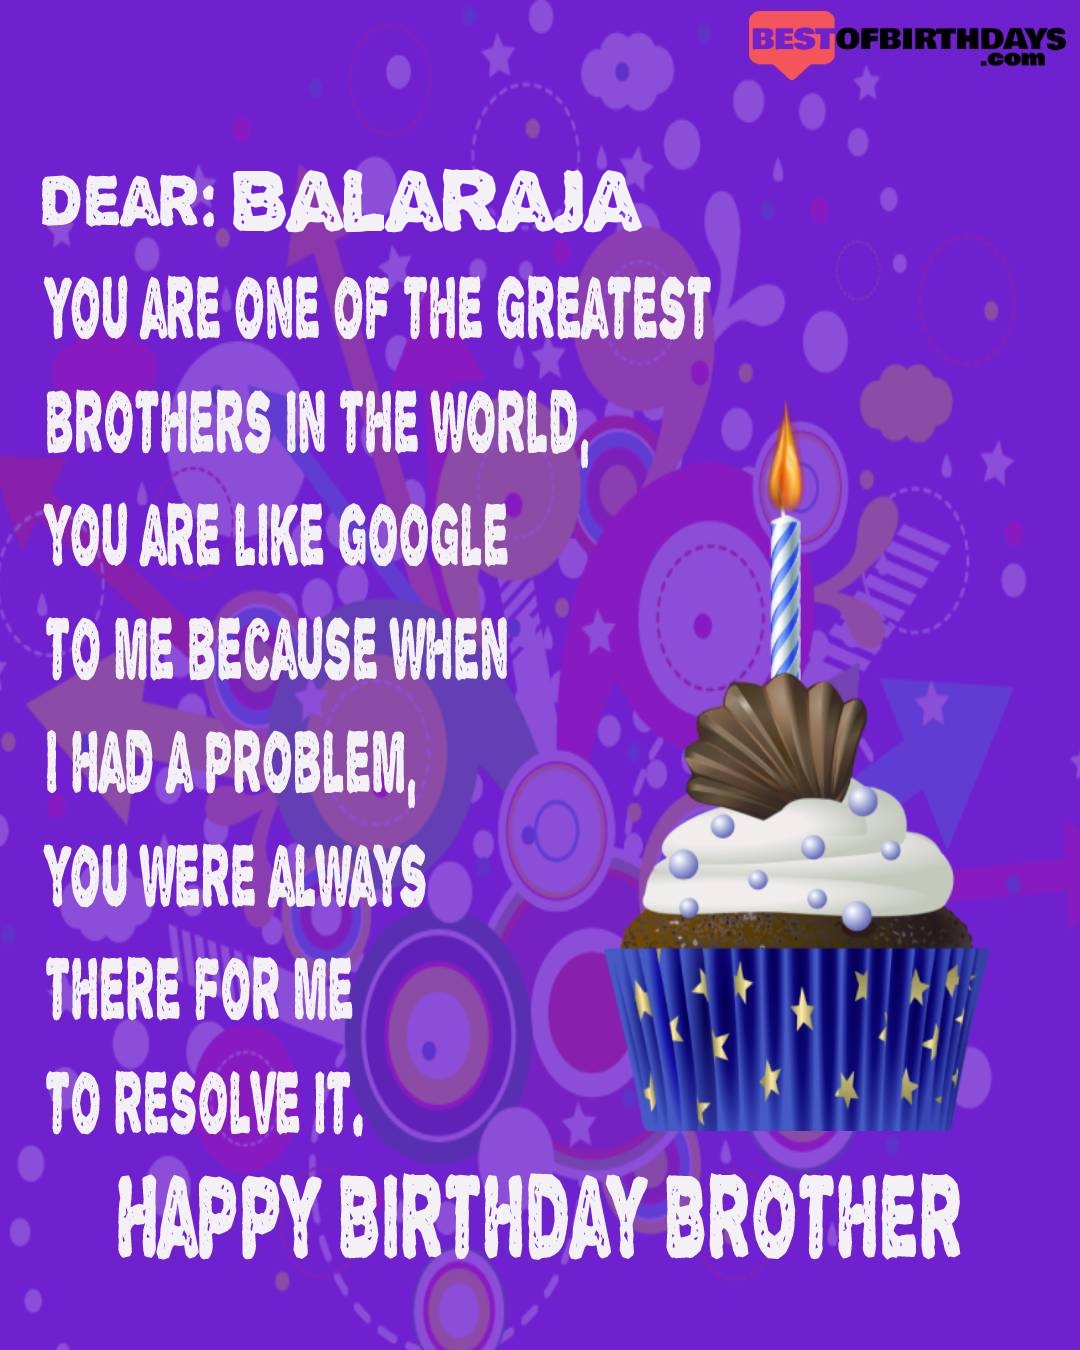 Happy birthday balaraja bhai brother bro